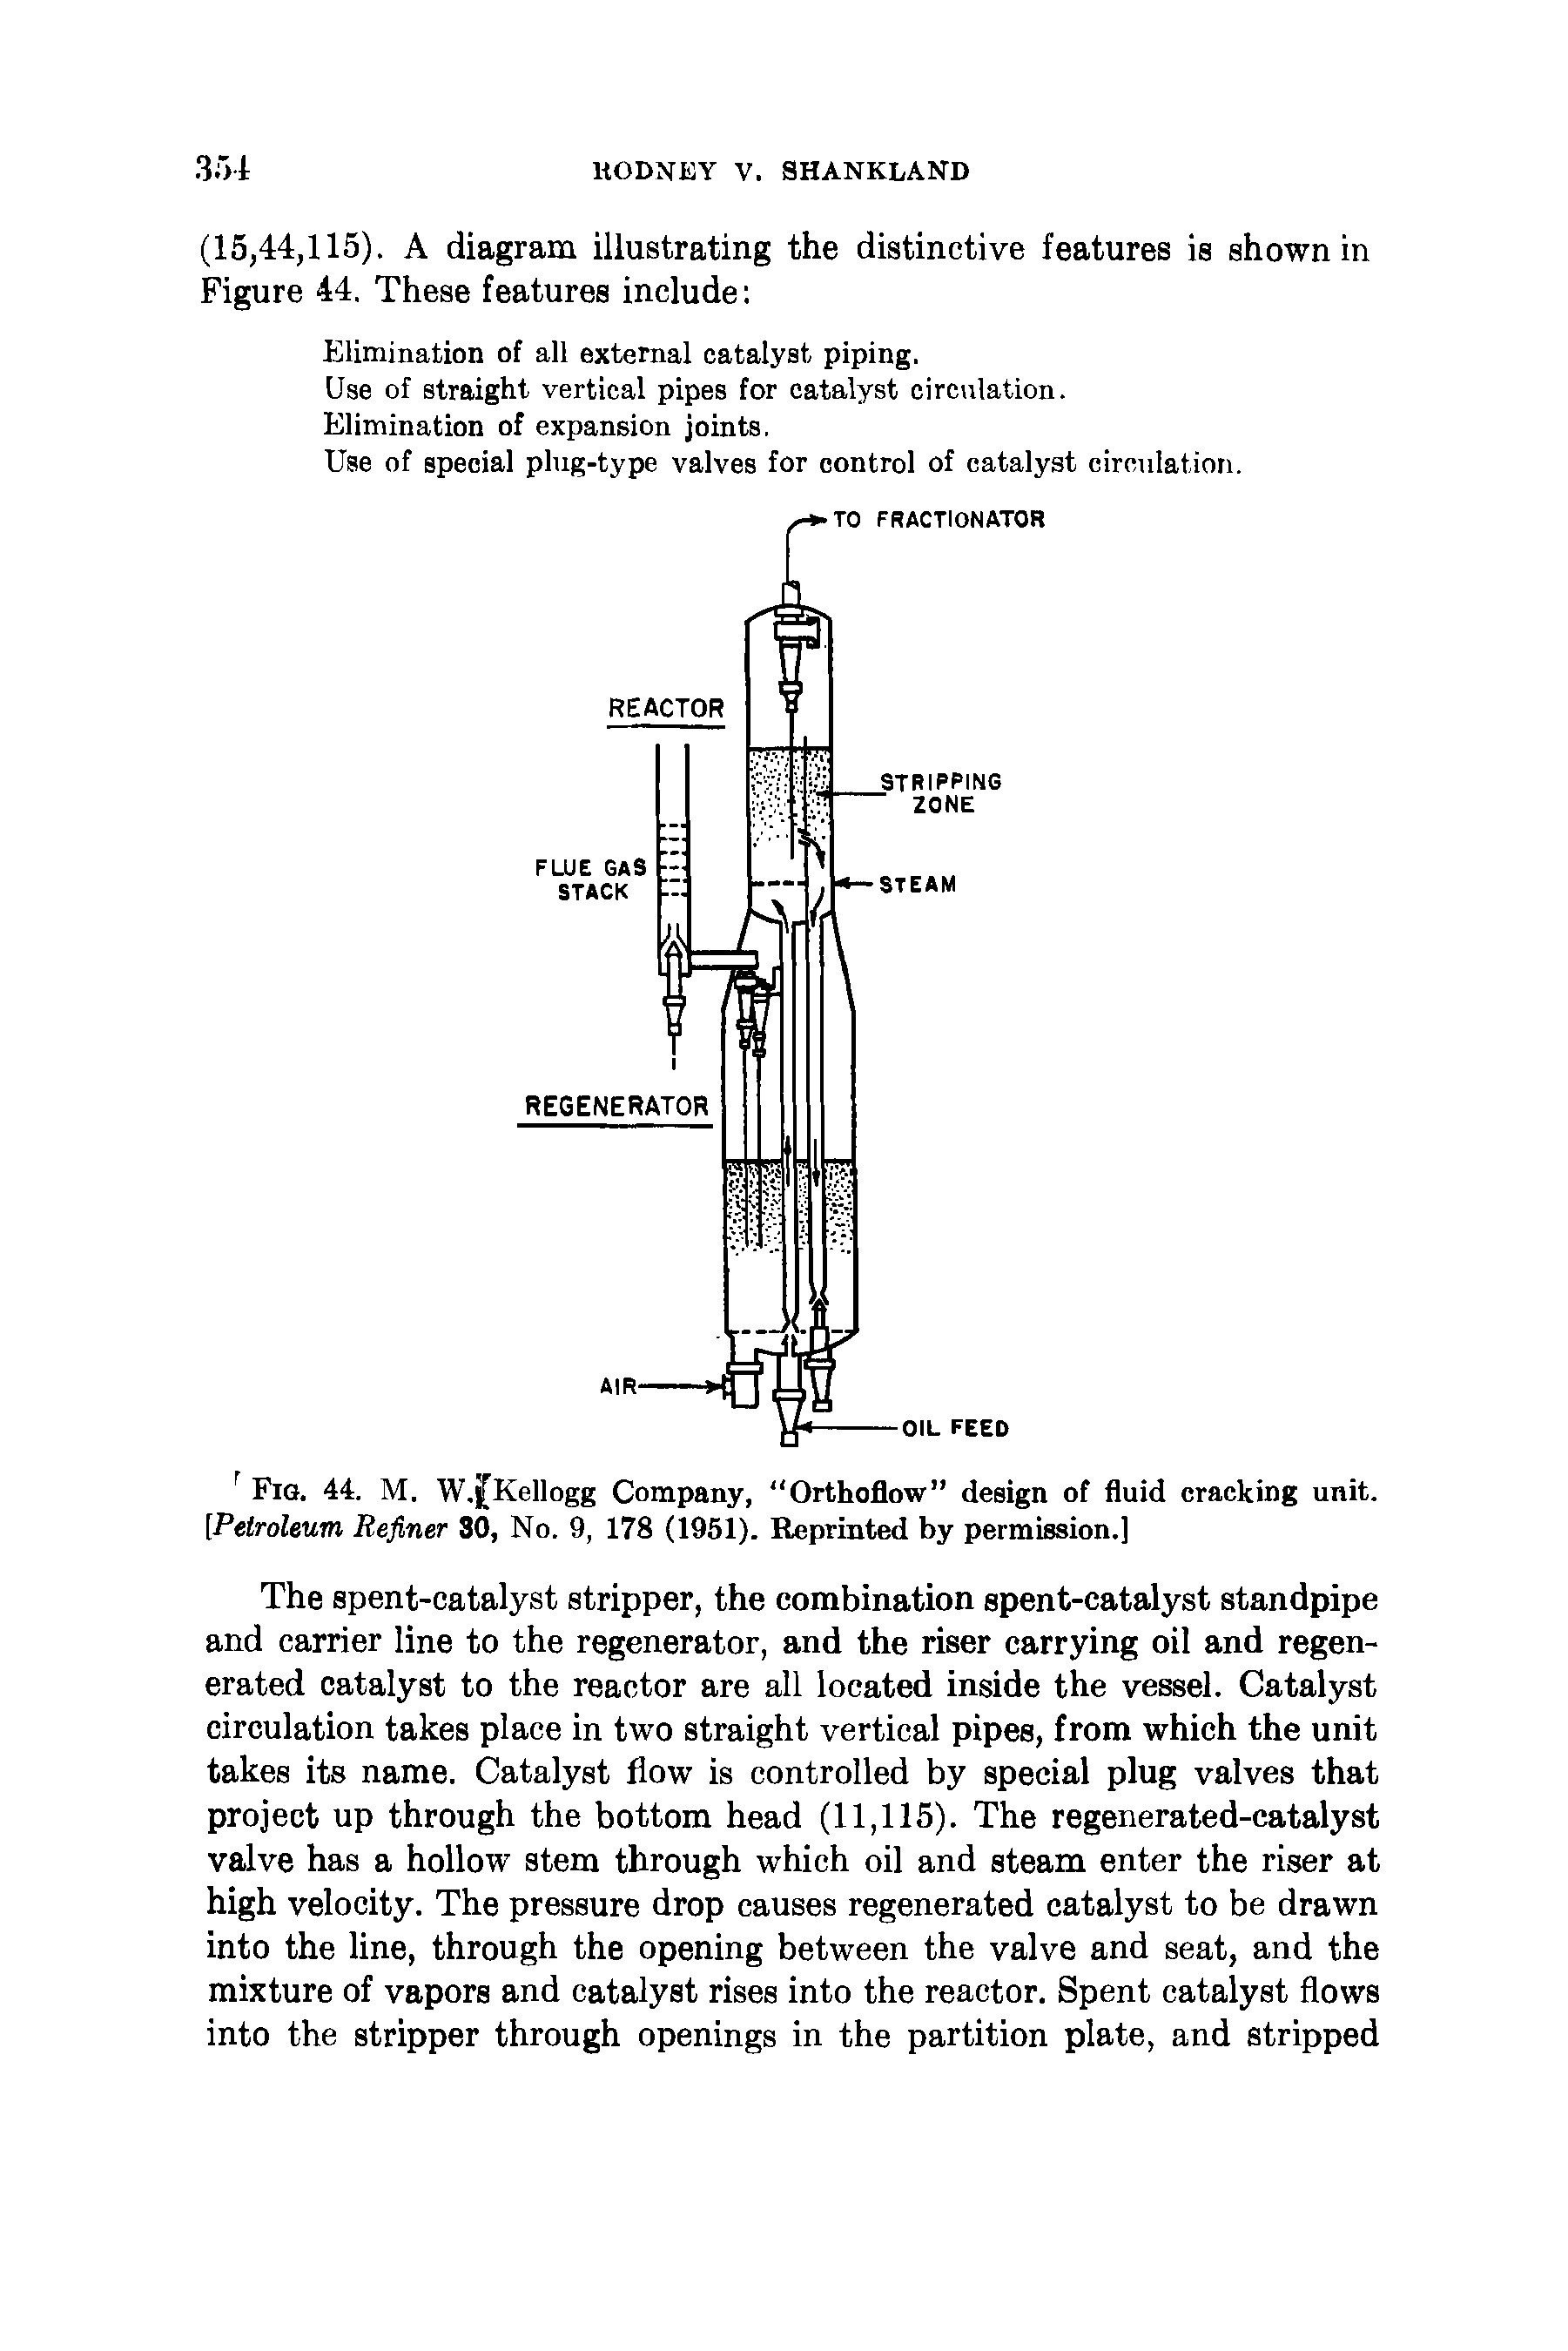 Fig. 44. M. W. Kellogg Company, Orthoflow design of fluid cracking unit. [Petroleum Refiner 30, No. 9, 178 (1951). Reprinted by permission.]...